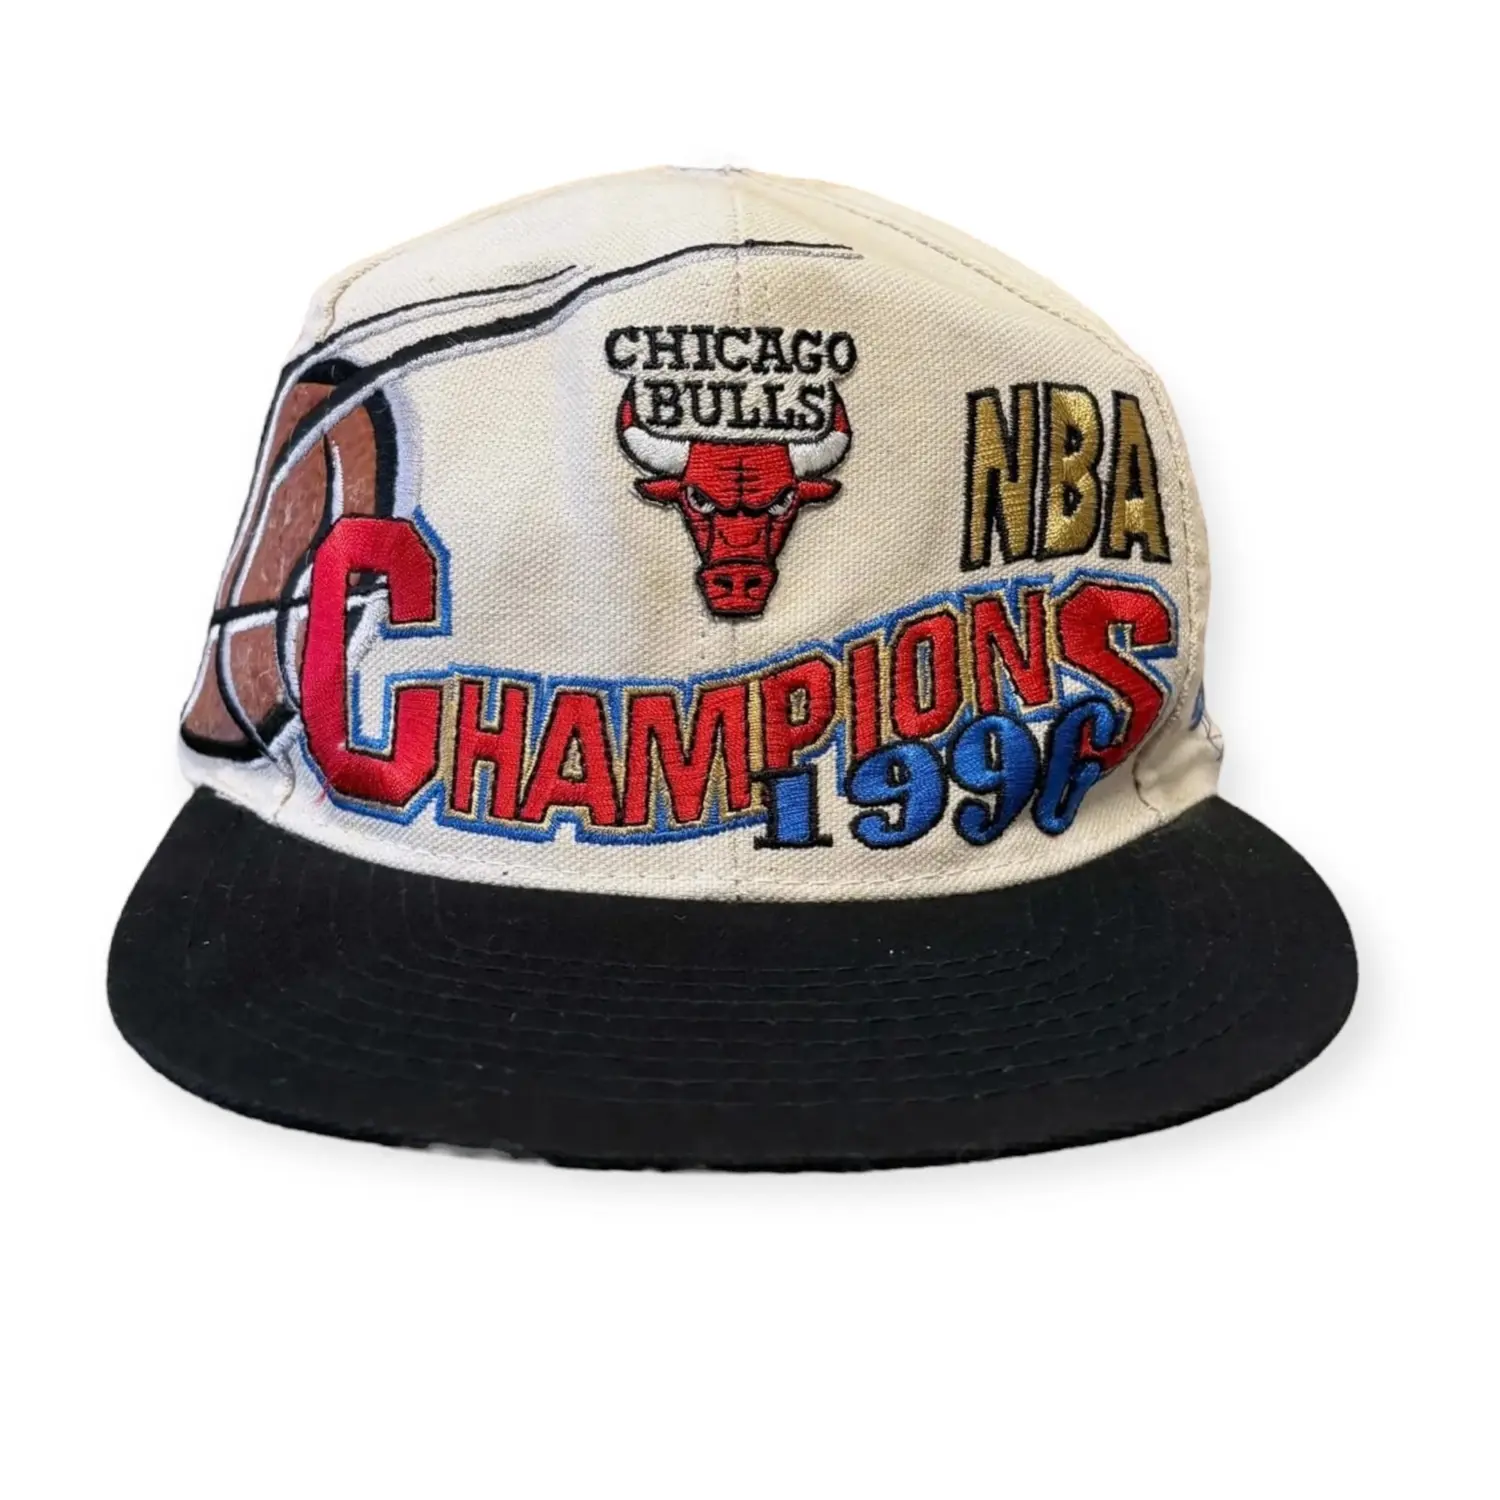 Vintage Chicago Bulls 1996 NBA Championship Looker Room Snap Back Hat